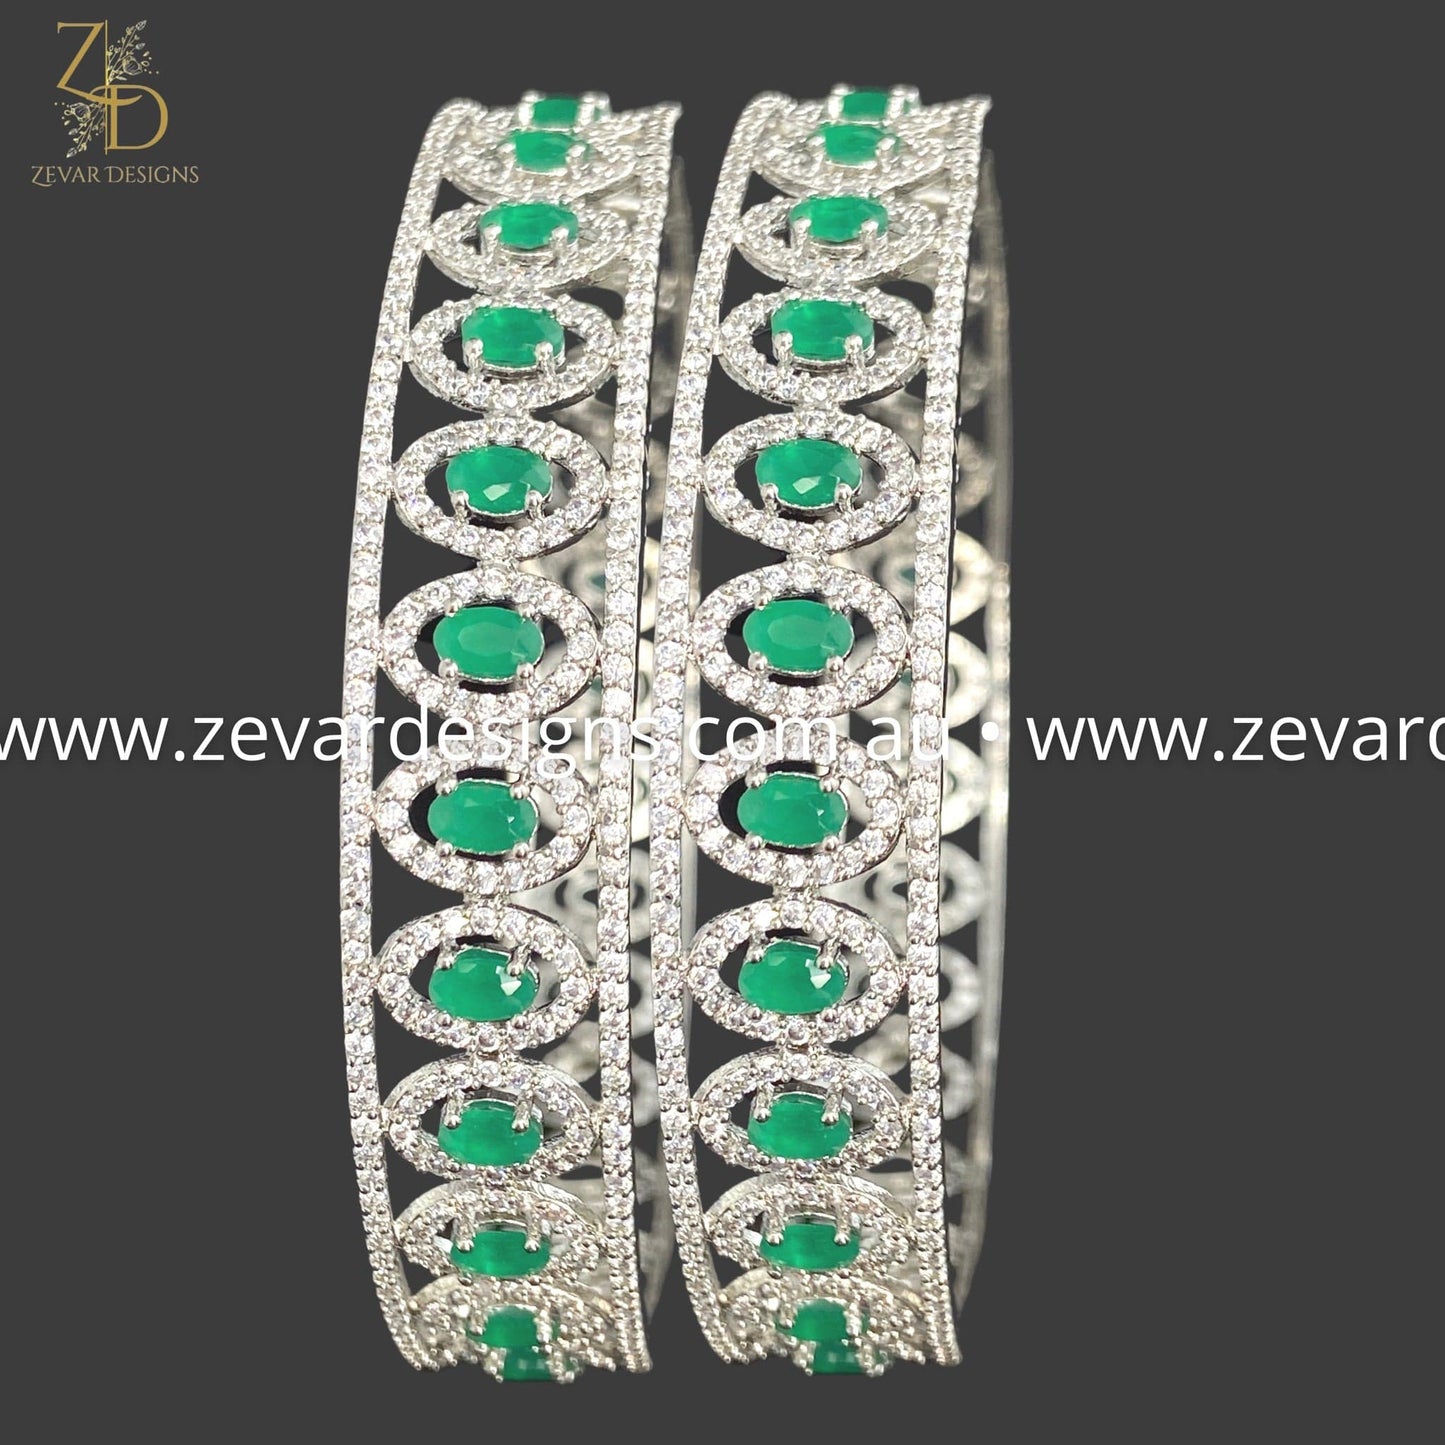 Zevar Designs Bangles & Bracelets - AD AD Bangles - Green and White Rhodium